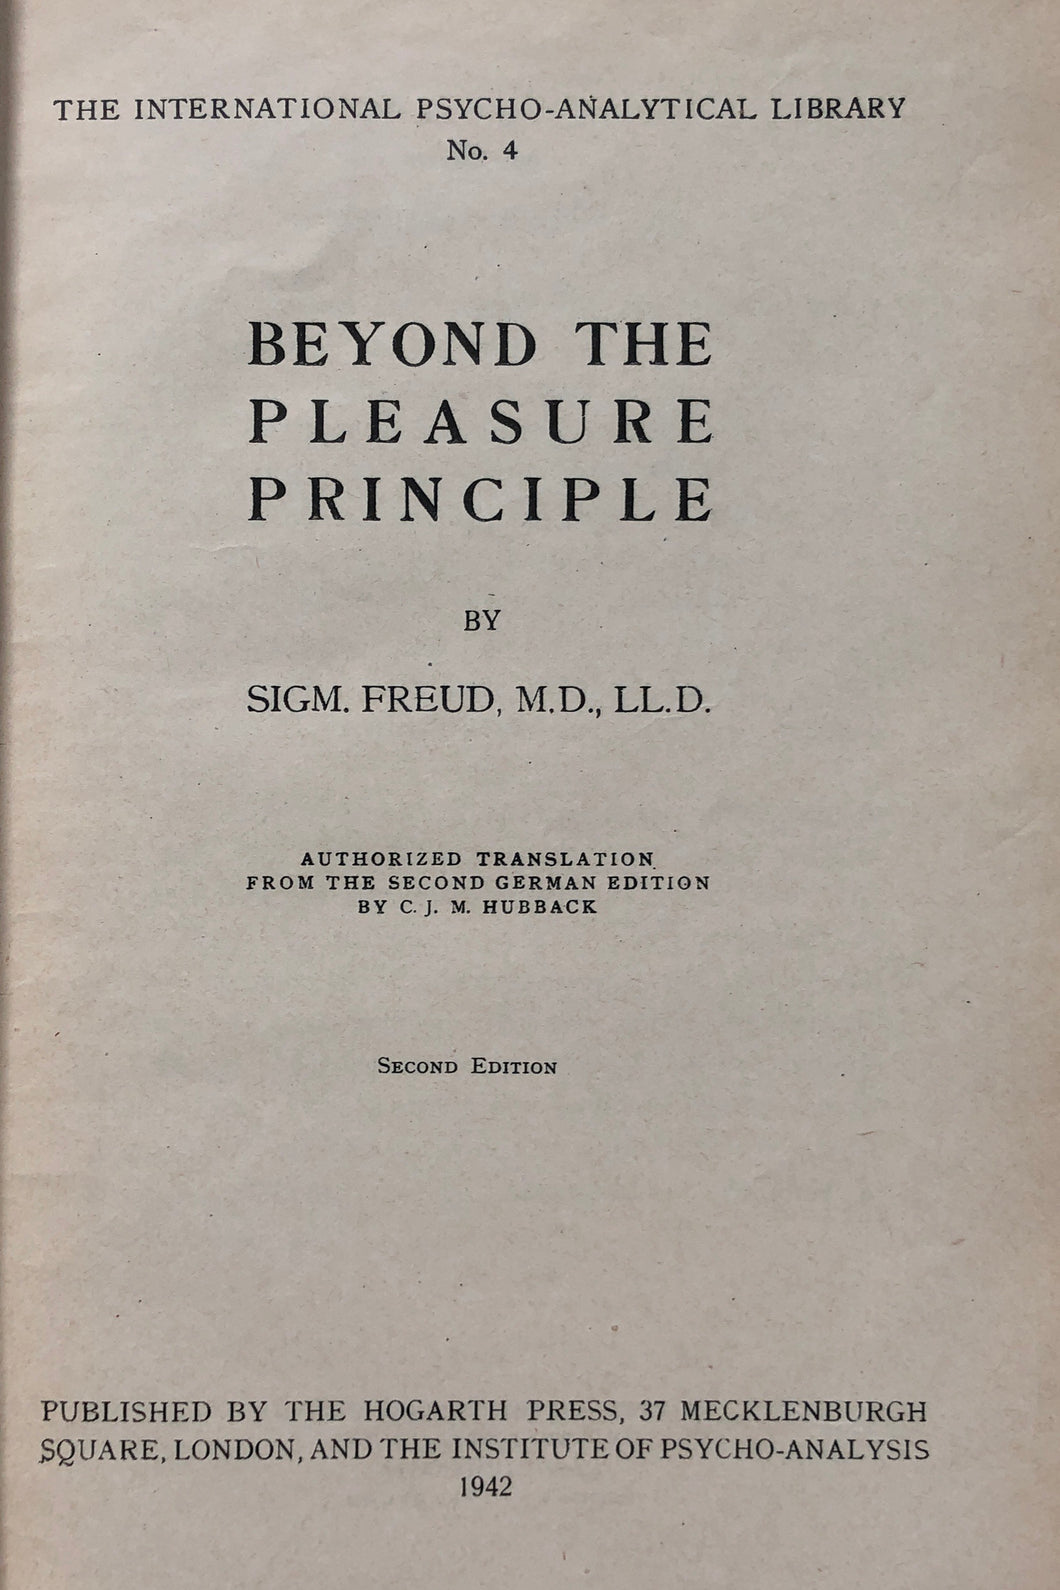 Beyond the pleasure principle, by Sigmund Freud, 1942